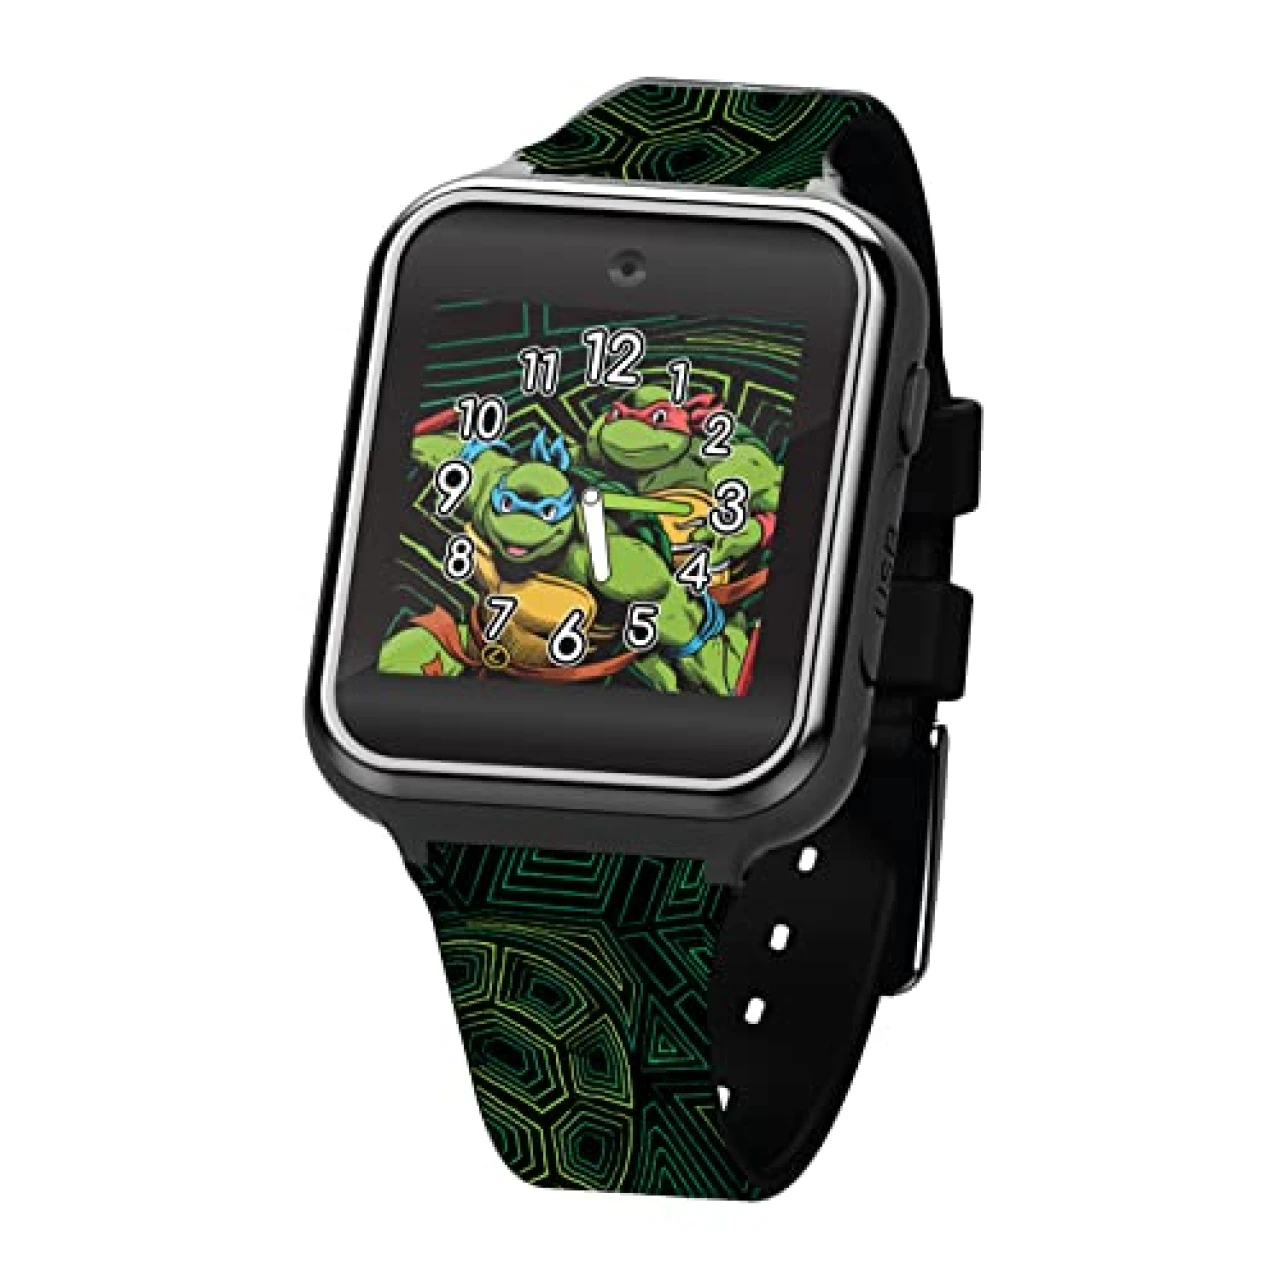 Accutime Paramount Teenage Mutant Ninja Turtles TMNT Black Educational Learning Touchscreen Smart Watch Toy